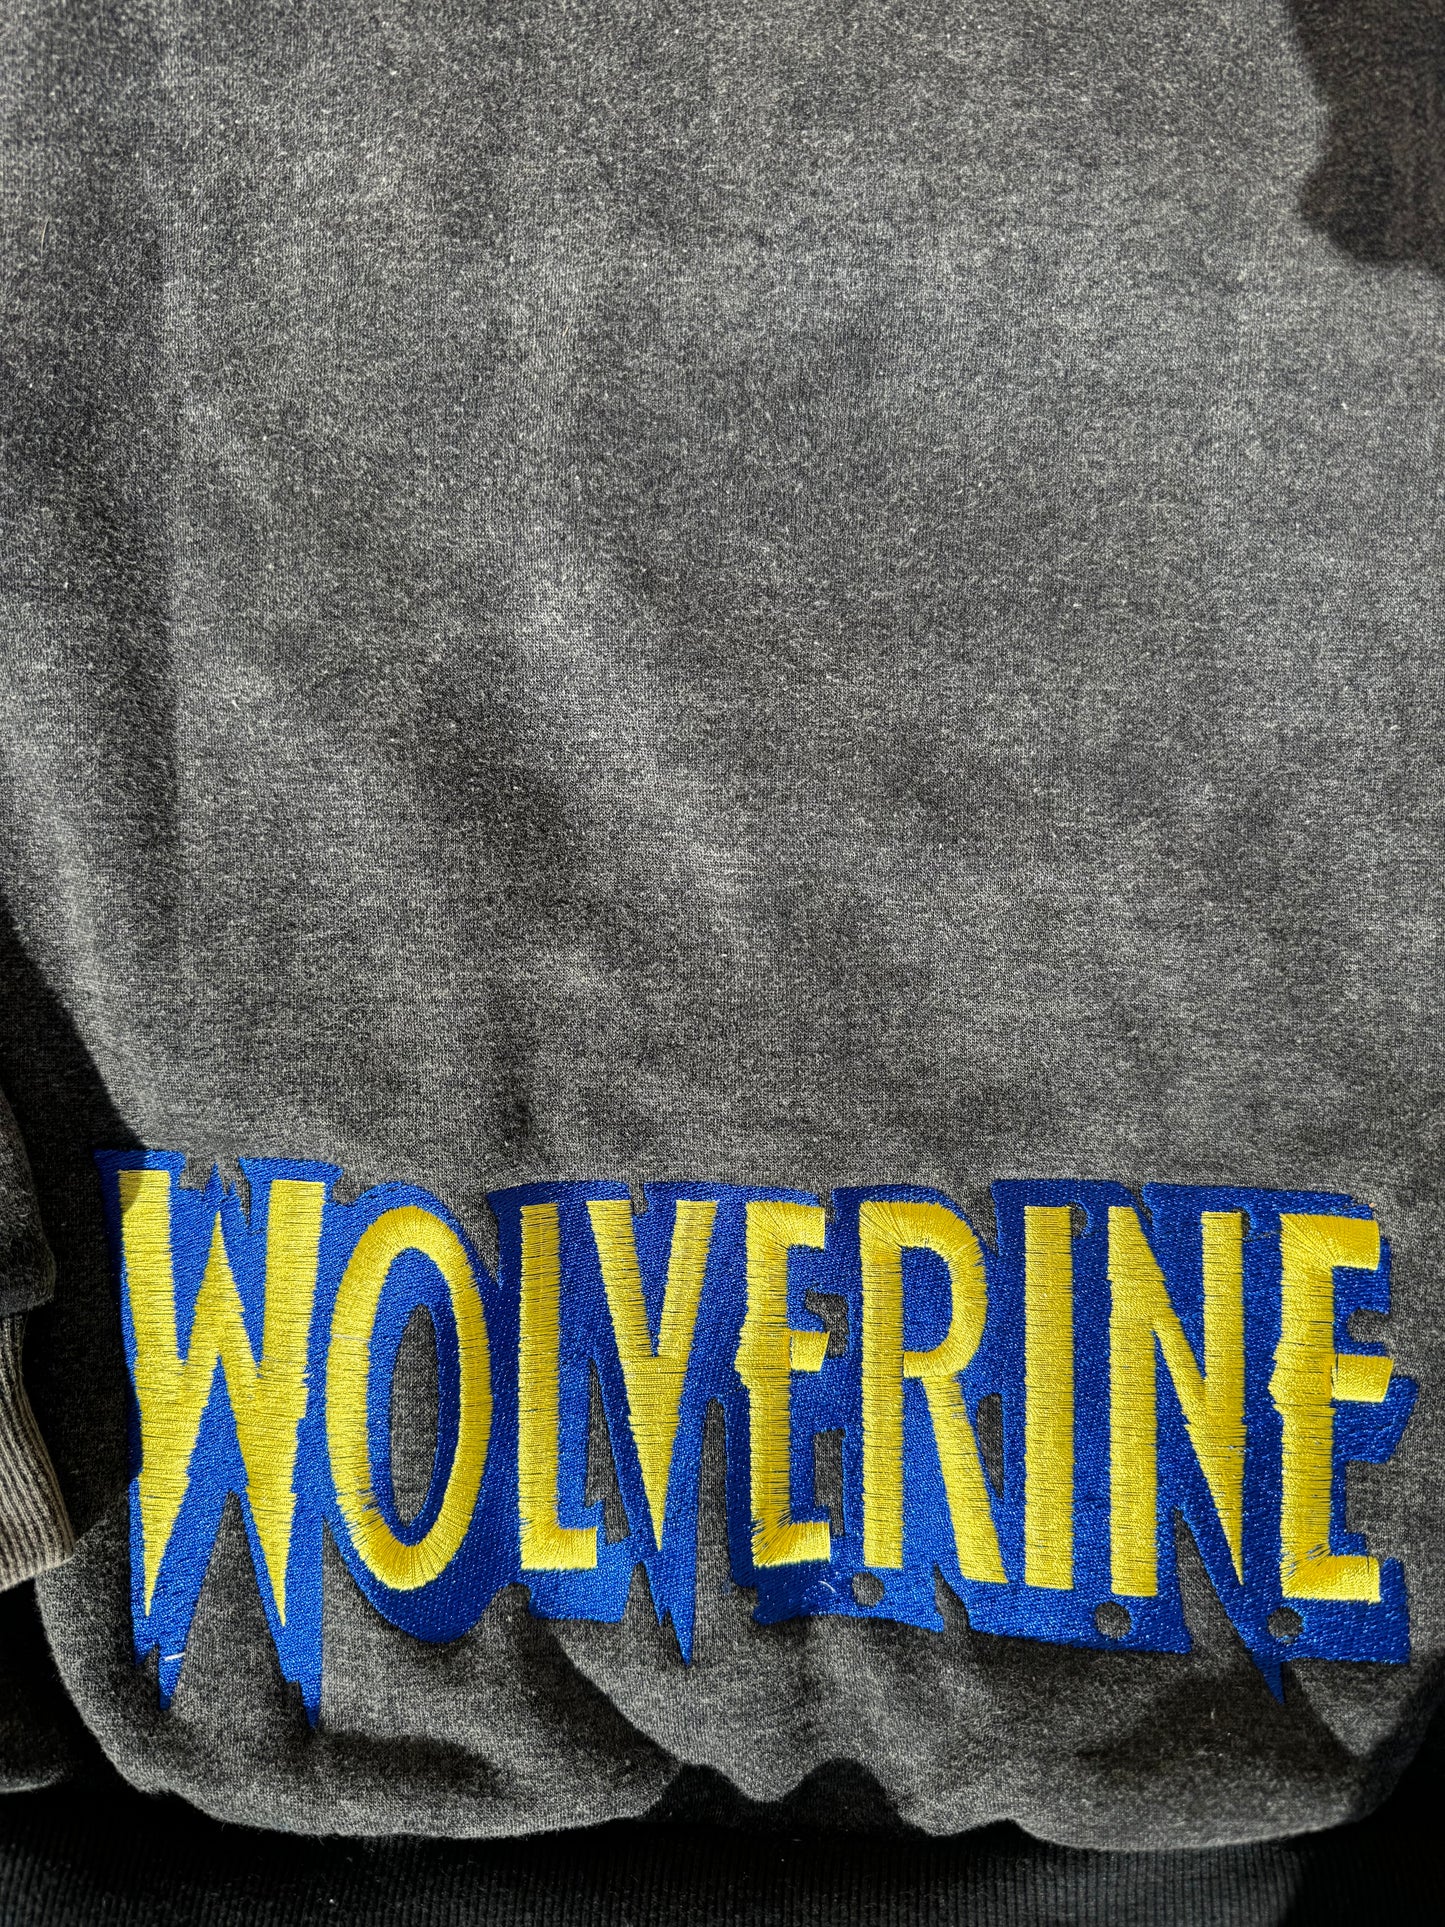 Wolverine hoodie big face marvel x-men Jim Lee rare marvel comics